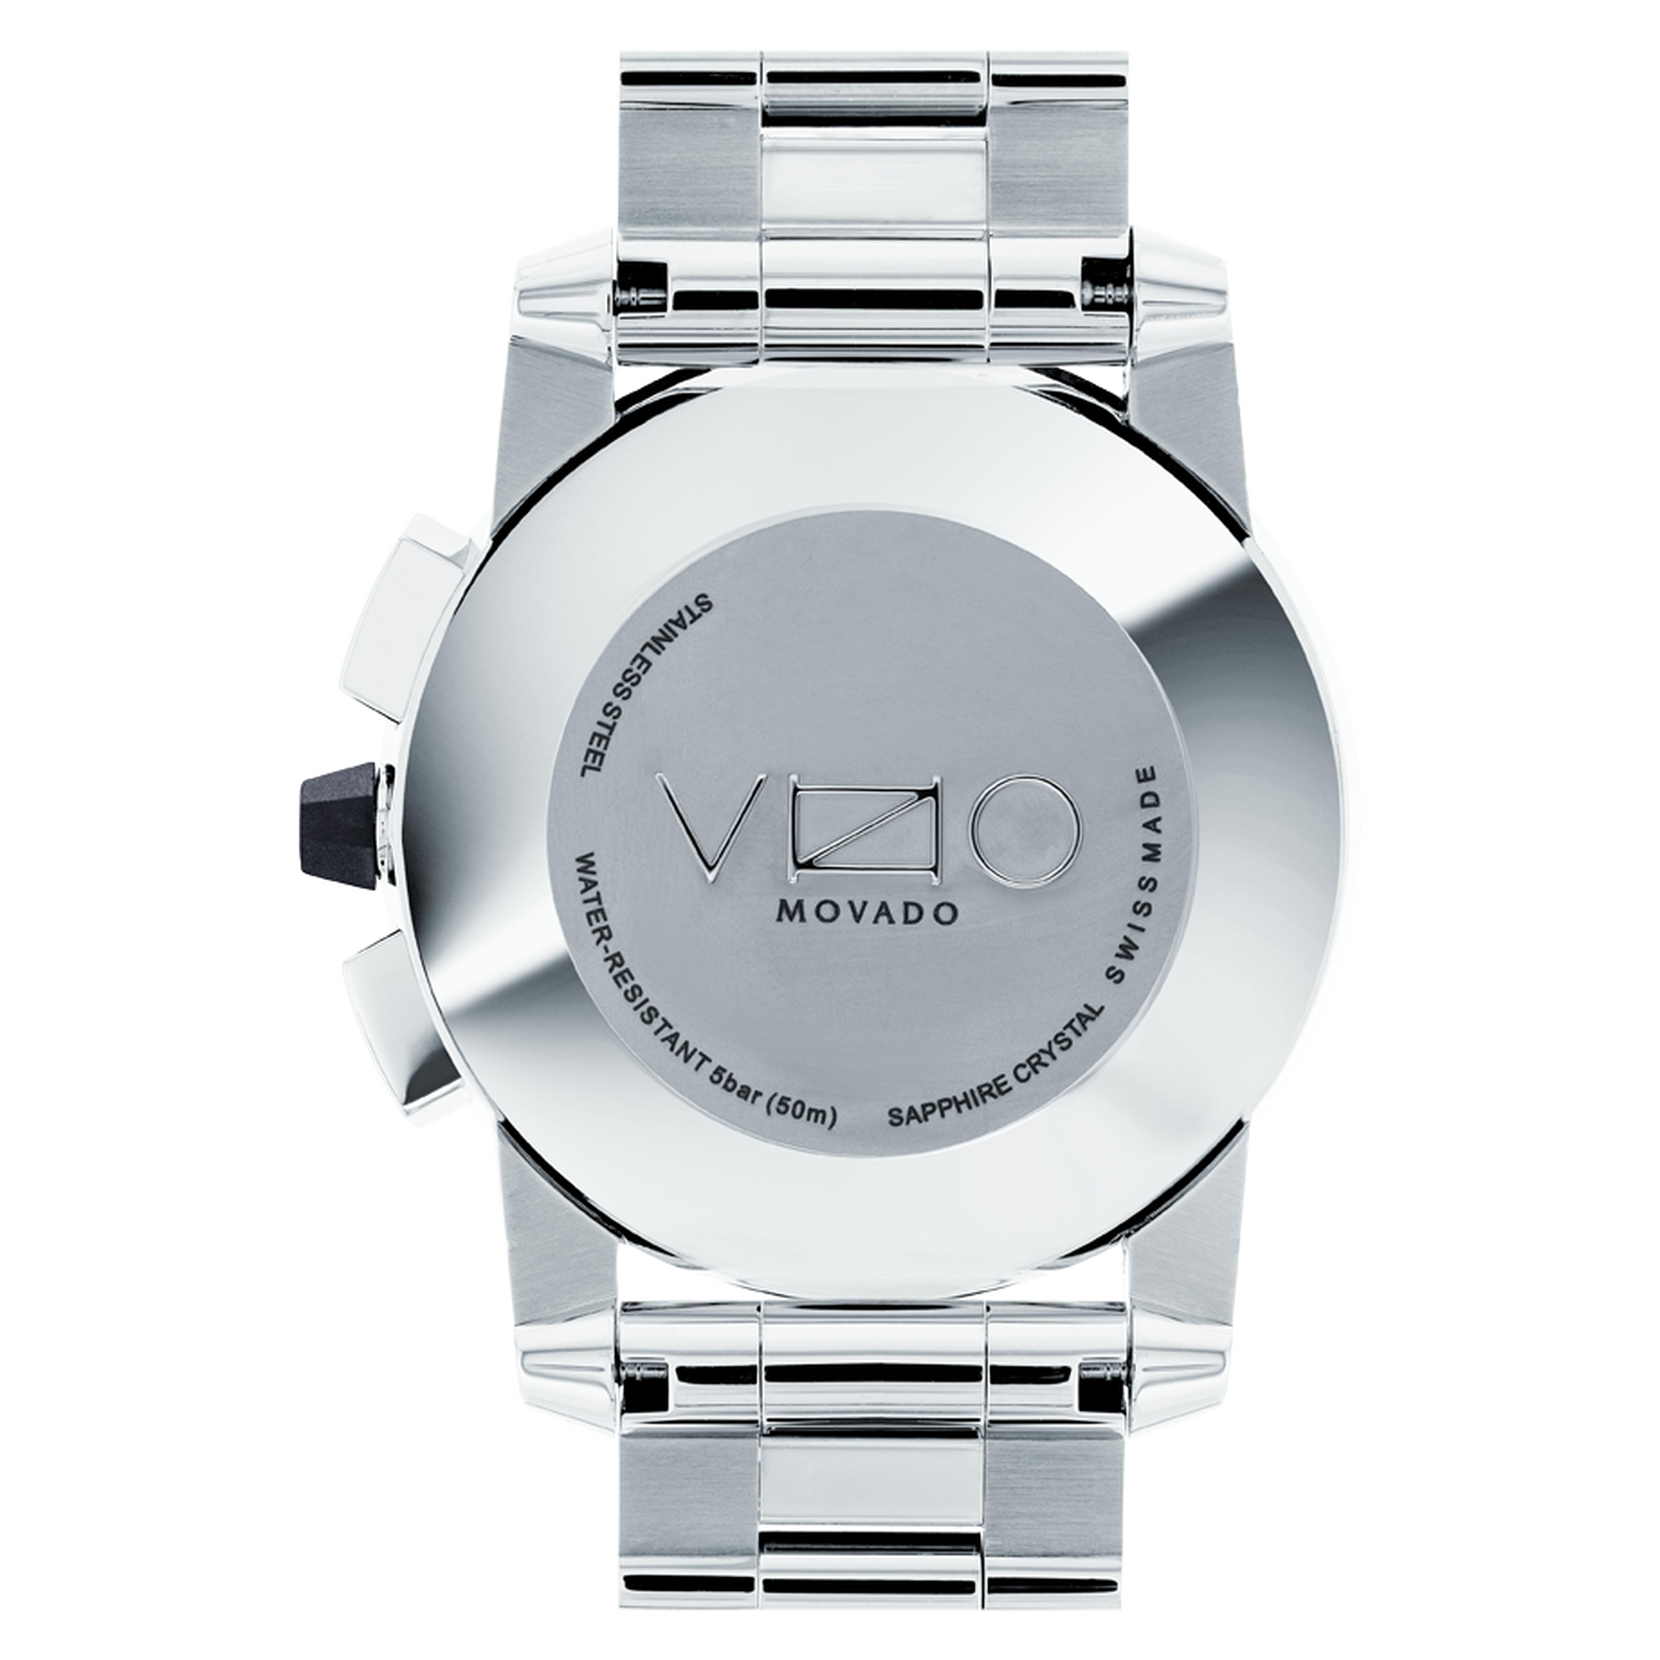 Movado | Vizio Men's Chronograph Watch